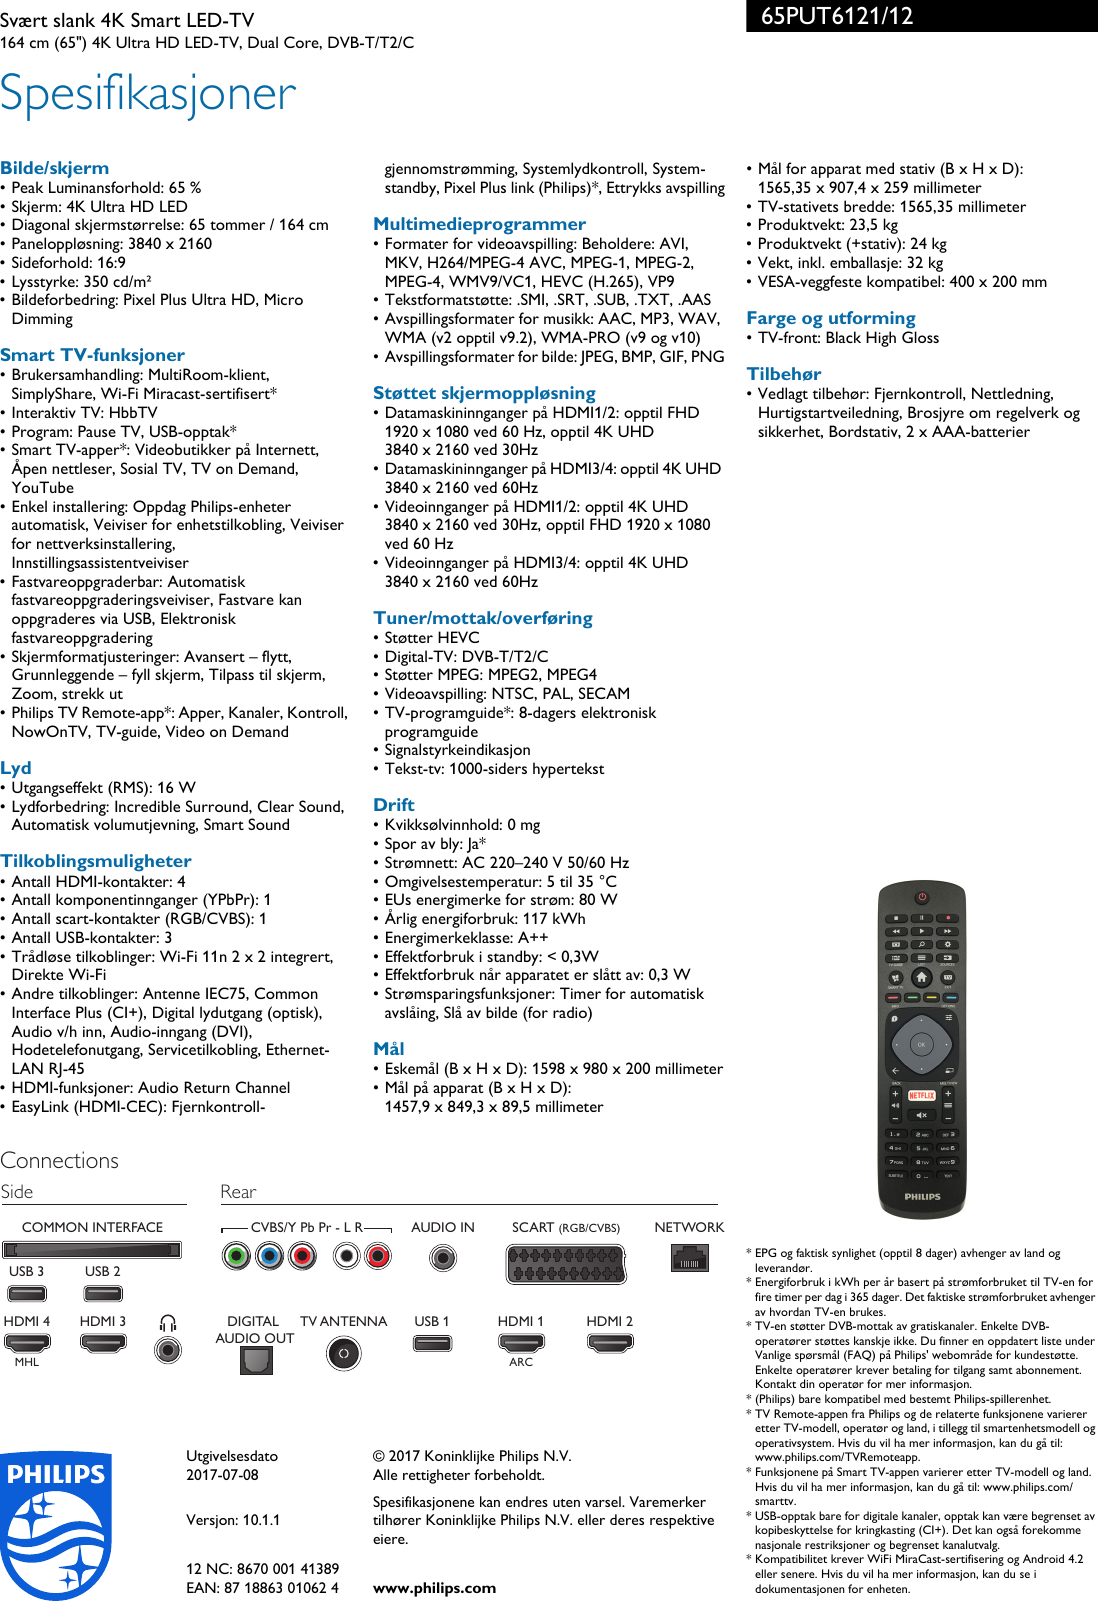 Page 3 of 3 - Philips 65PUT6121/12 Svært Slank 4K Smart LED-TV Med Pixel Plus Ultra HD User Manual Hefte 65put6121 12 Pss Norno